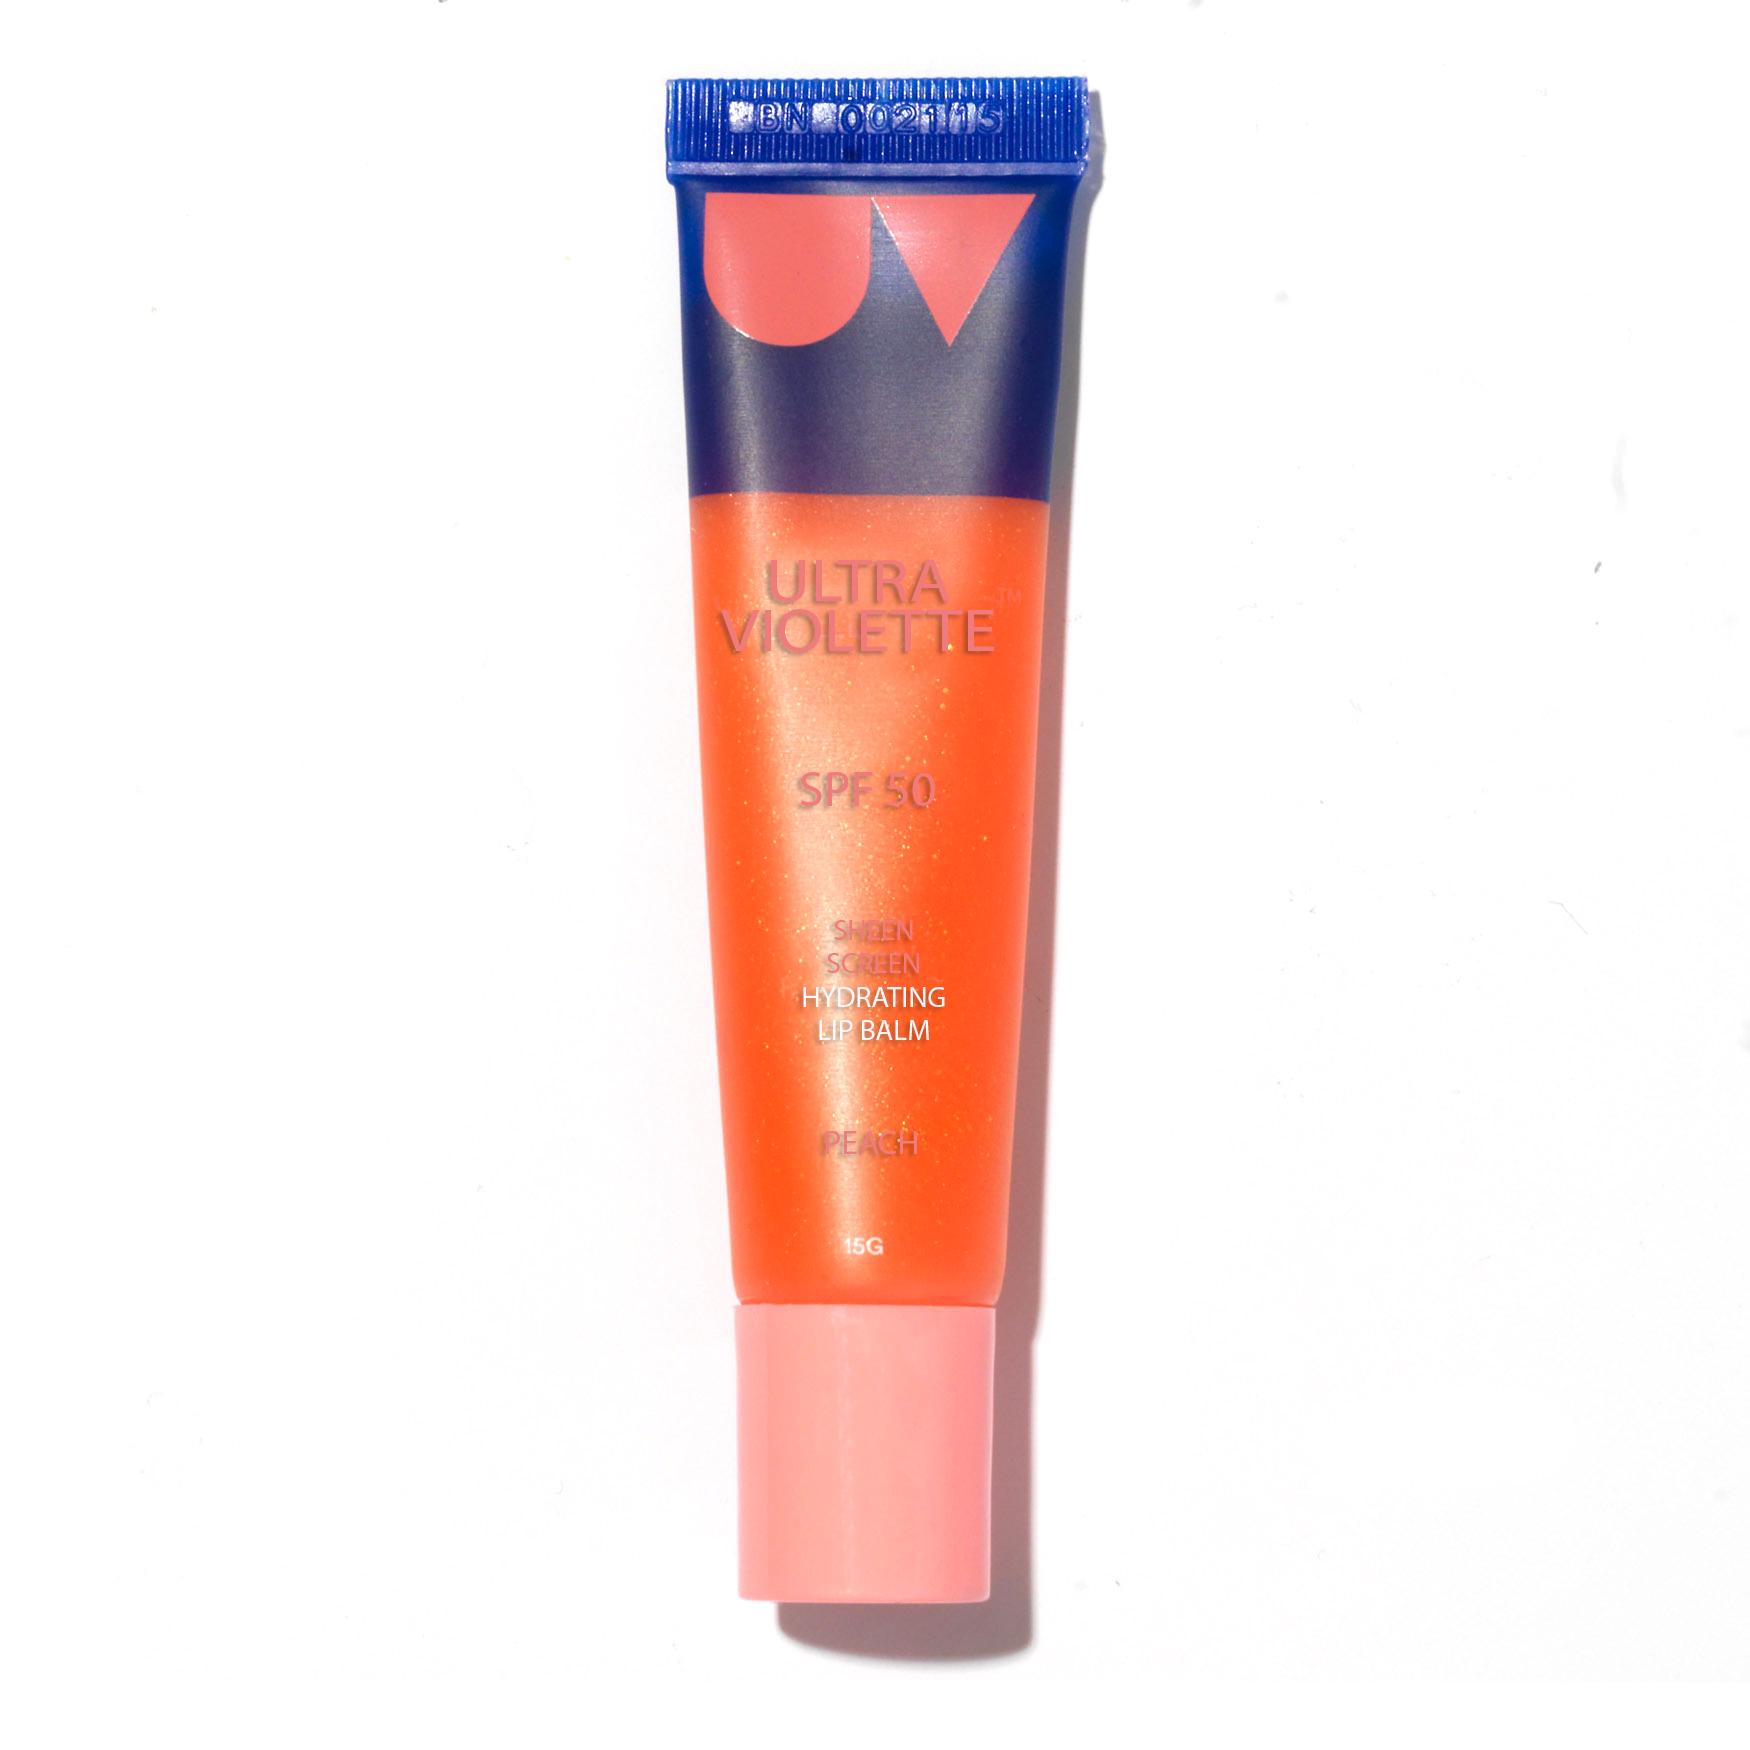 Ultra Violette Sheen Screen Hydrating Lip Balm SPF 50 in Peach